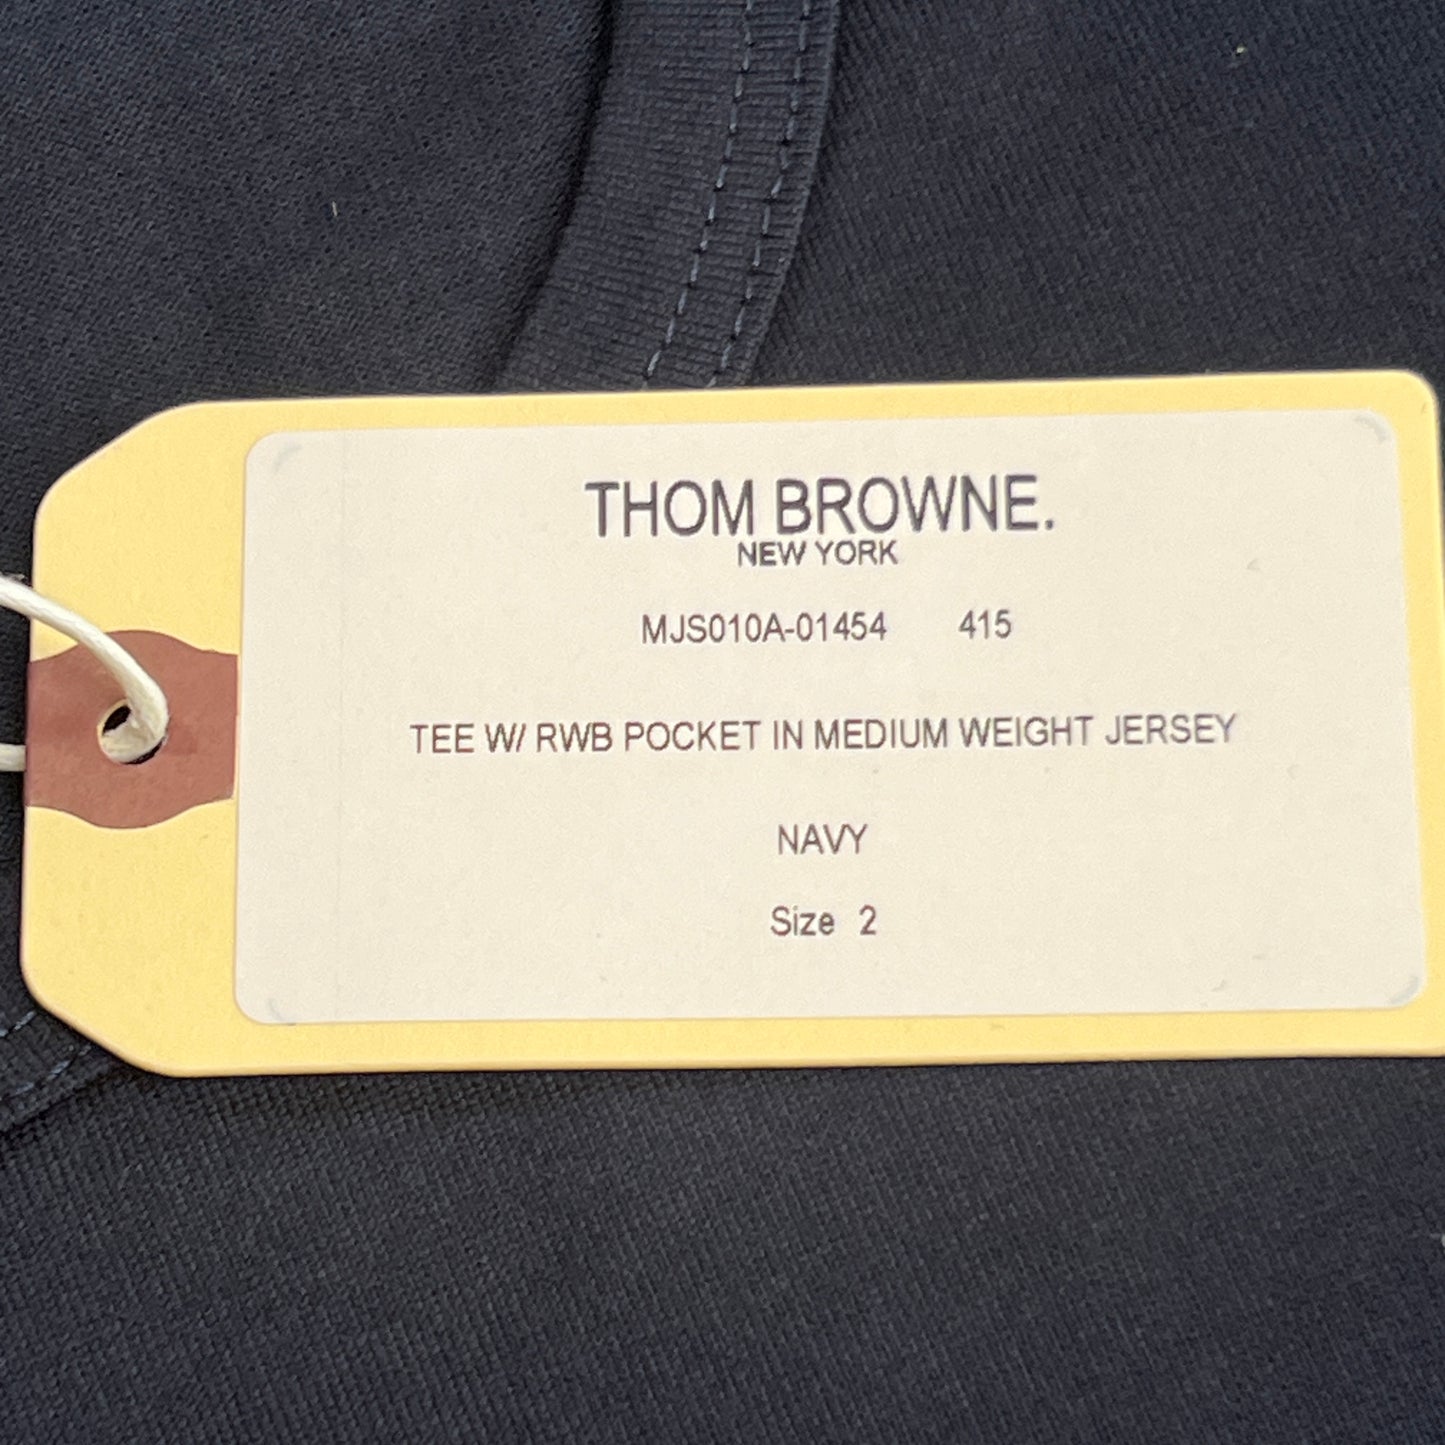 THOM BROWNE Short Sleeve RWB Pocket Tee in Medium Weight Jersey Cotton Navy Size 2(New)